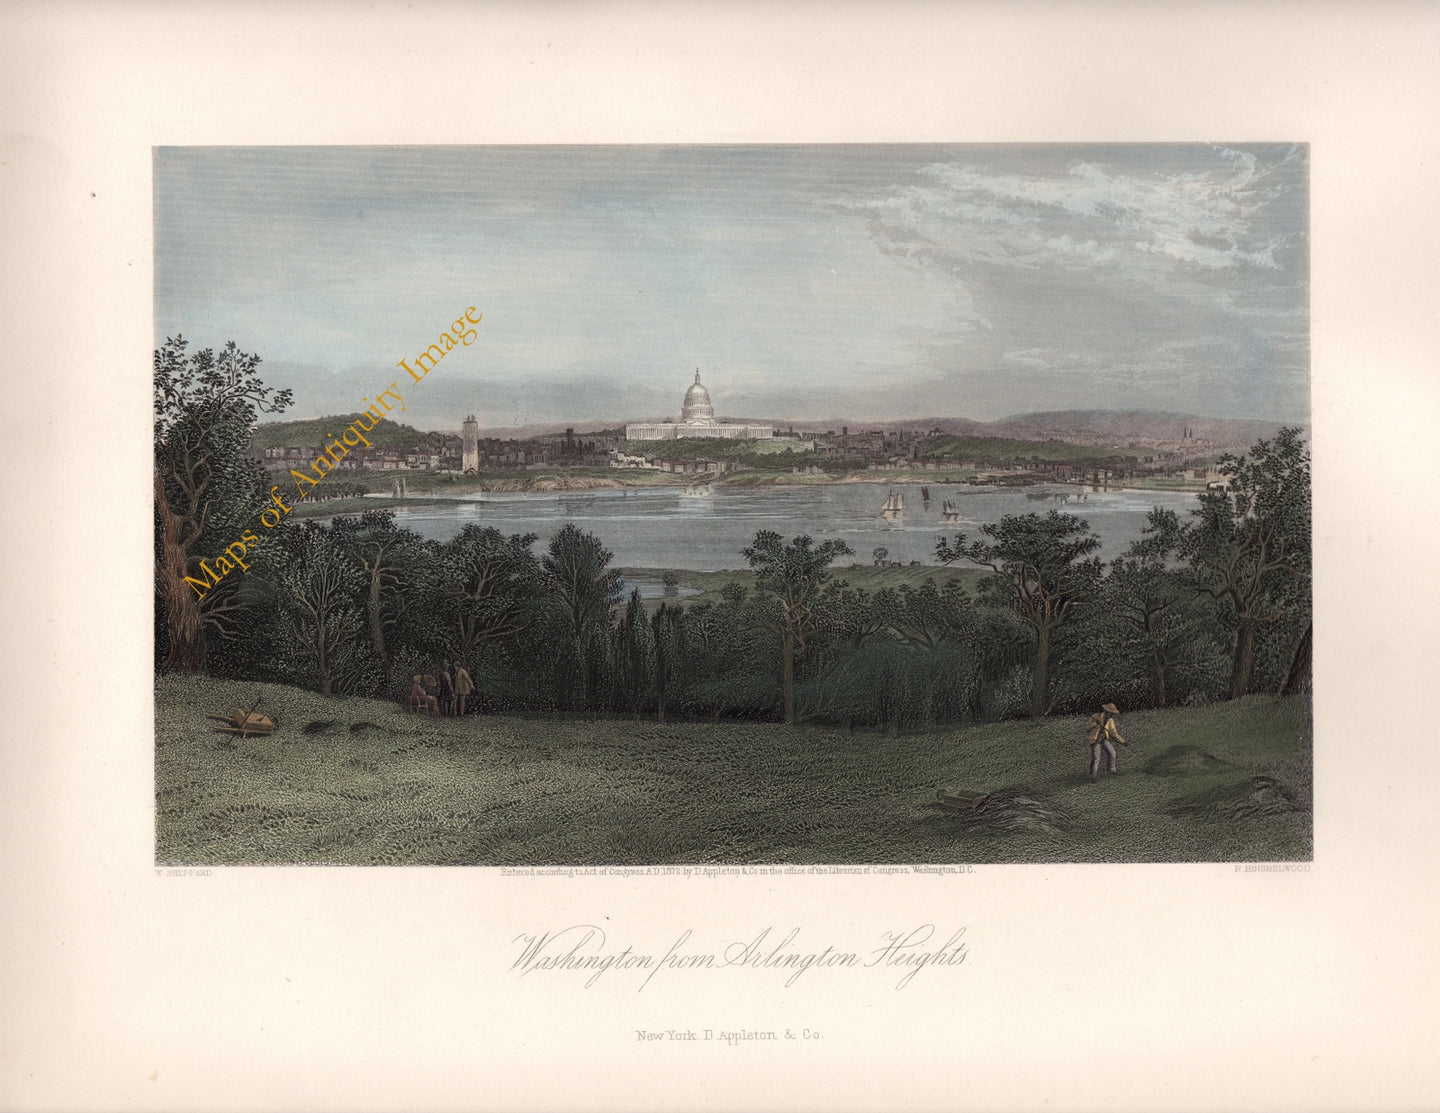 Hand-Colored-Antique-Engraved-Illustration-Washington-from-Arlington-Heights****-United-States-Washington-DC-1872-Appleton-Maps-Of-Antiquity